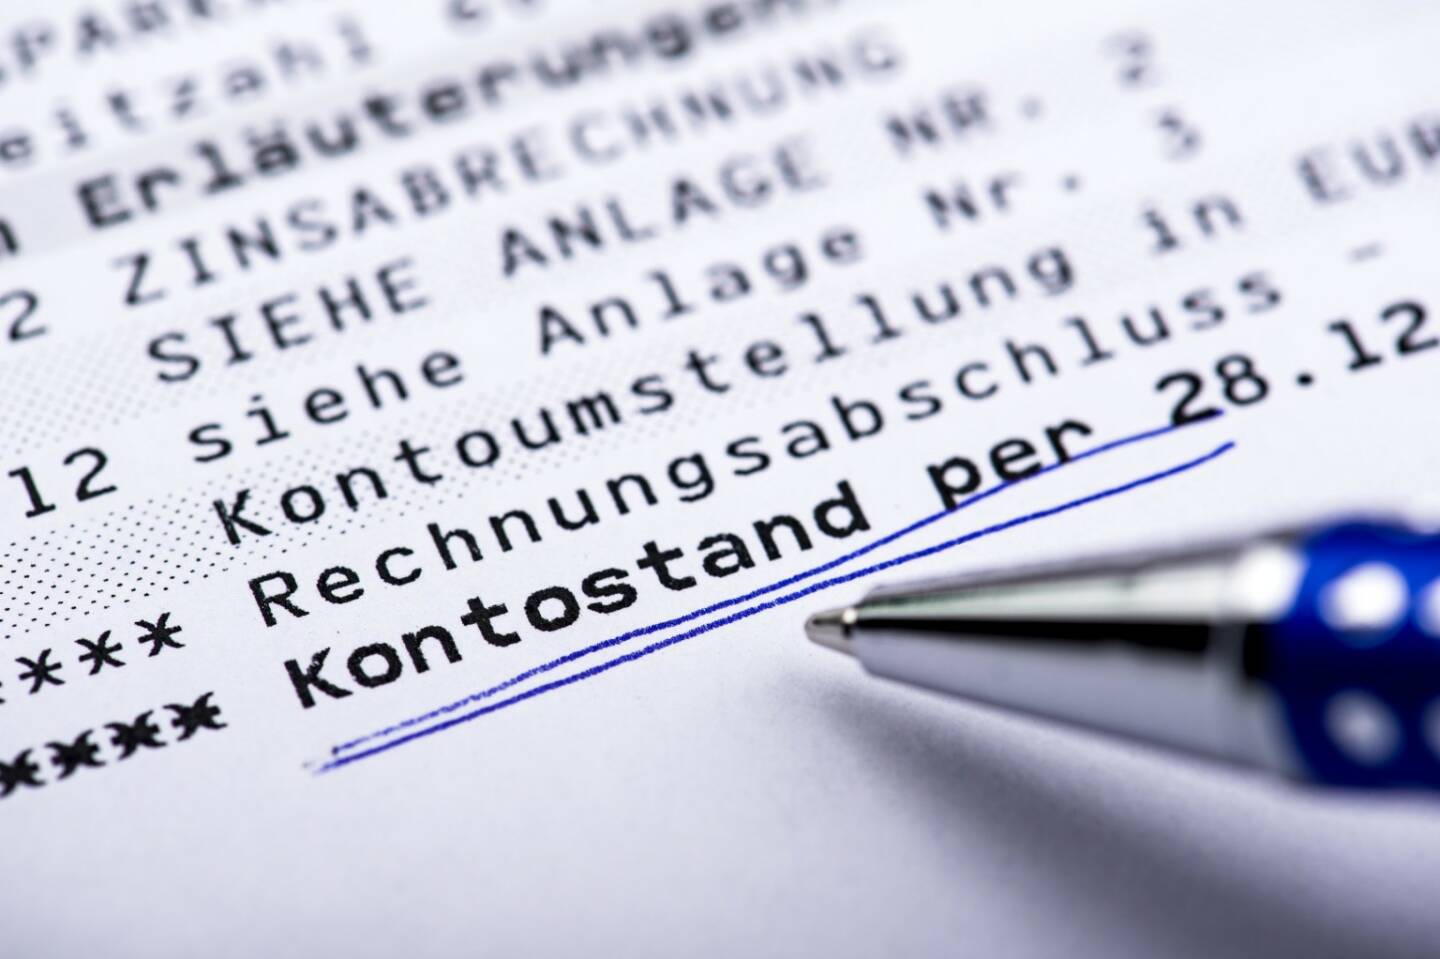 Bank, Kontoauszug, Abrechnung, http://www.shutterstock.com/de/pic-178813196/stock-photo-bank-balance-writen-in-german-language-kontostand.html